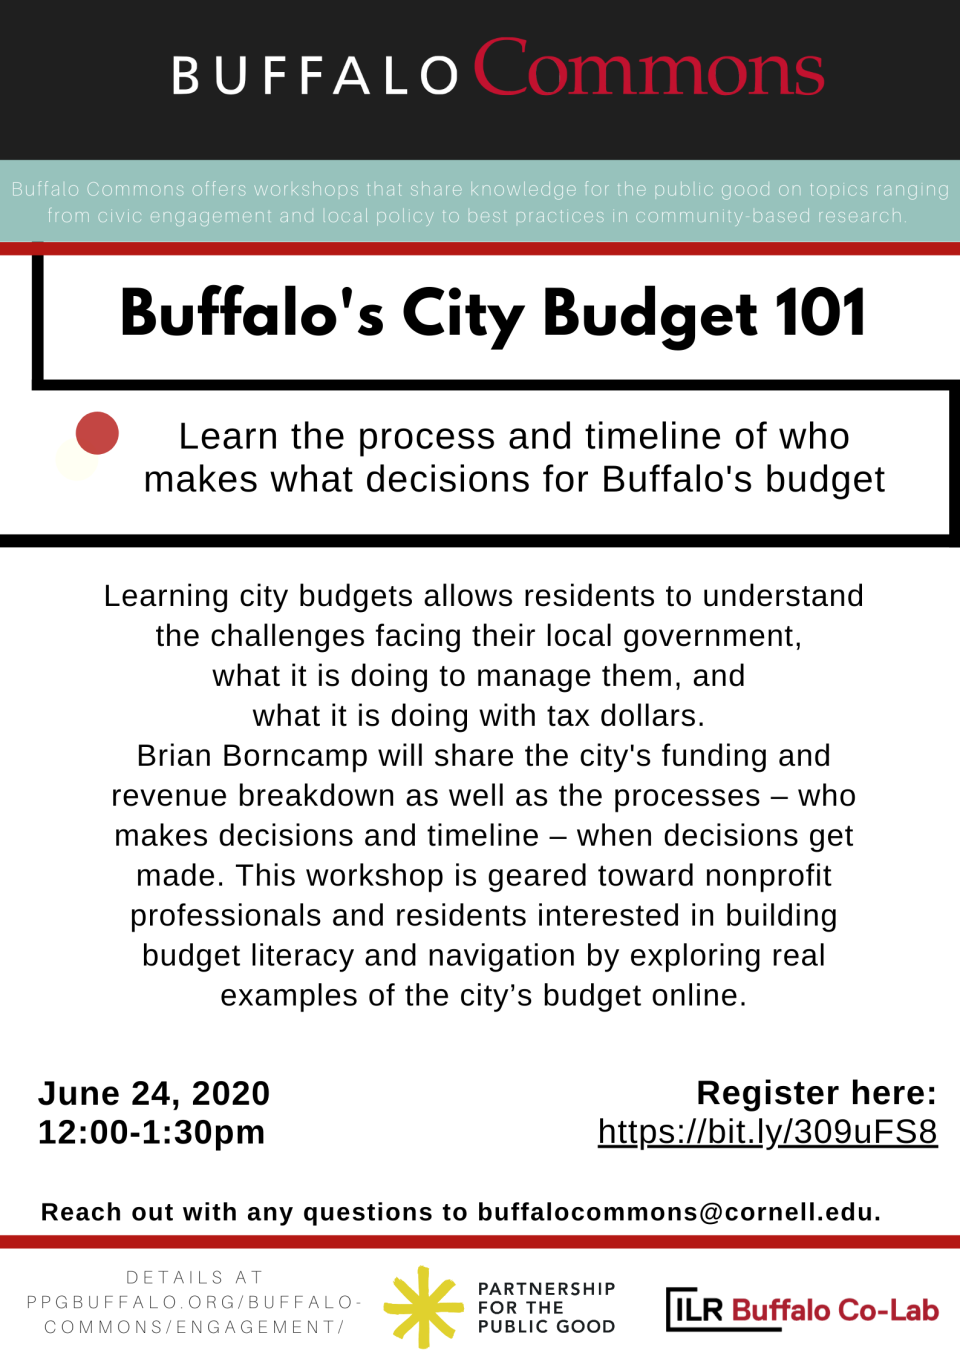 Buffalo Commons Workshop: Buffalo's City Budget 101